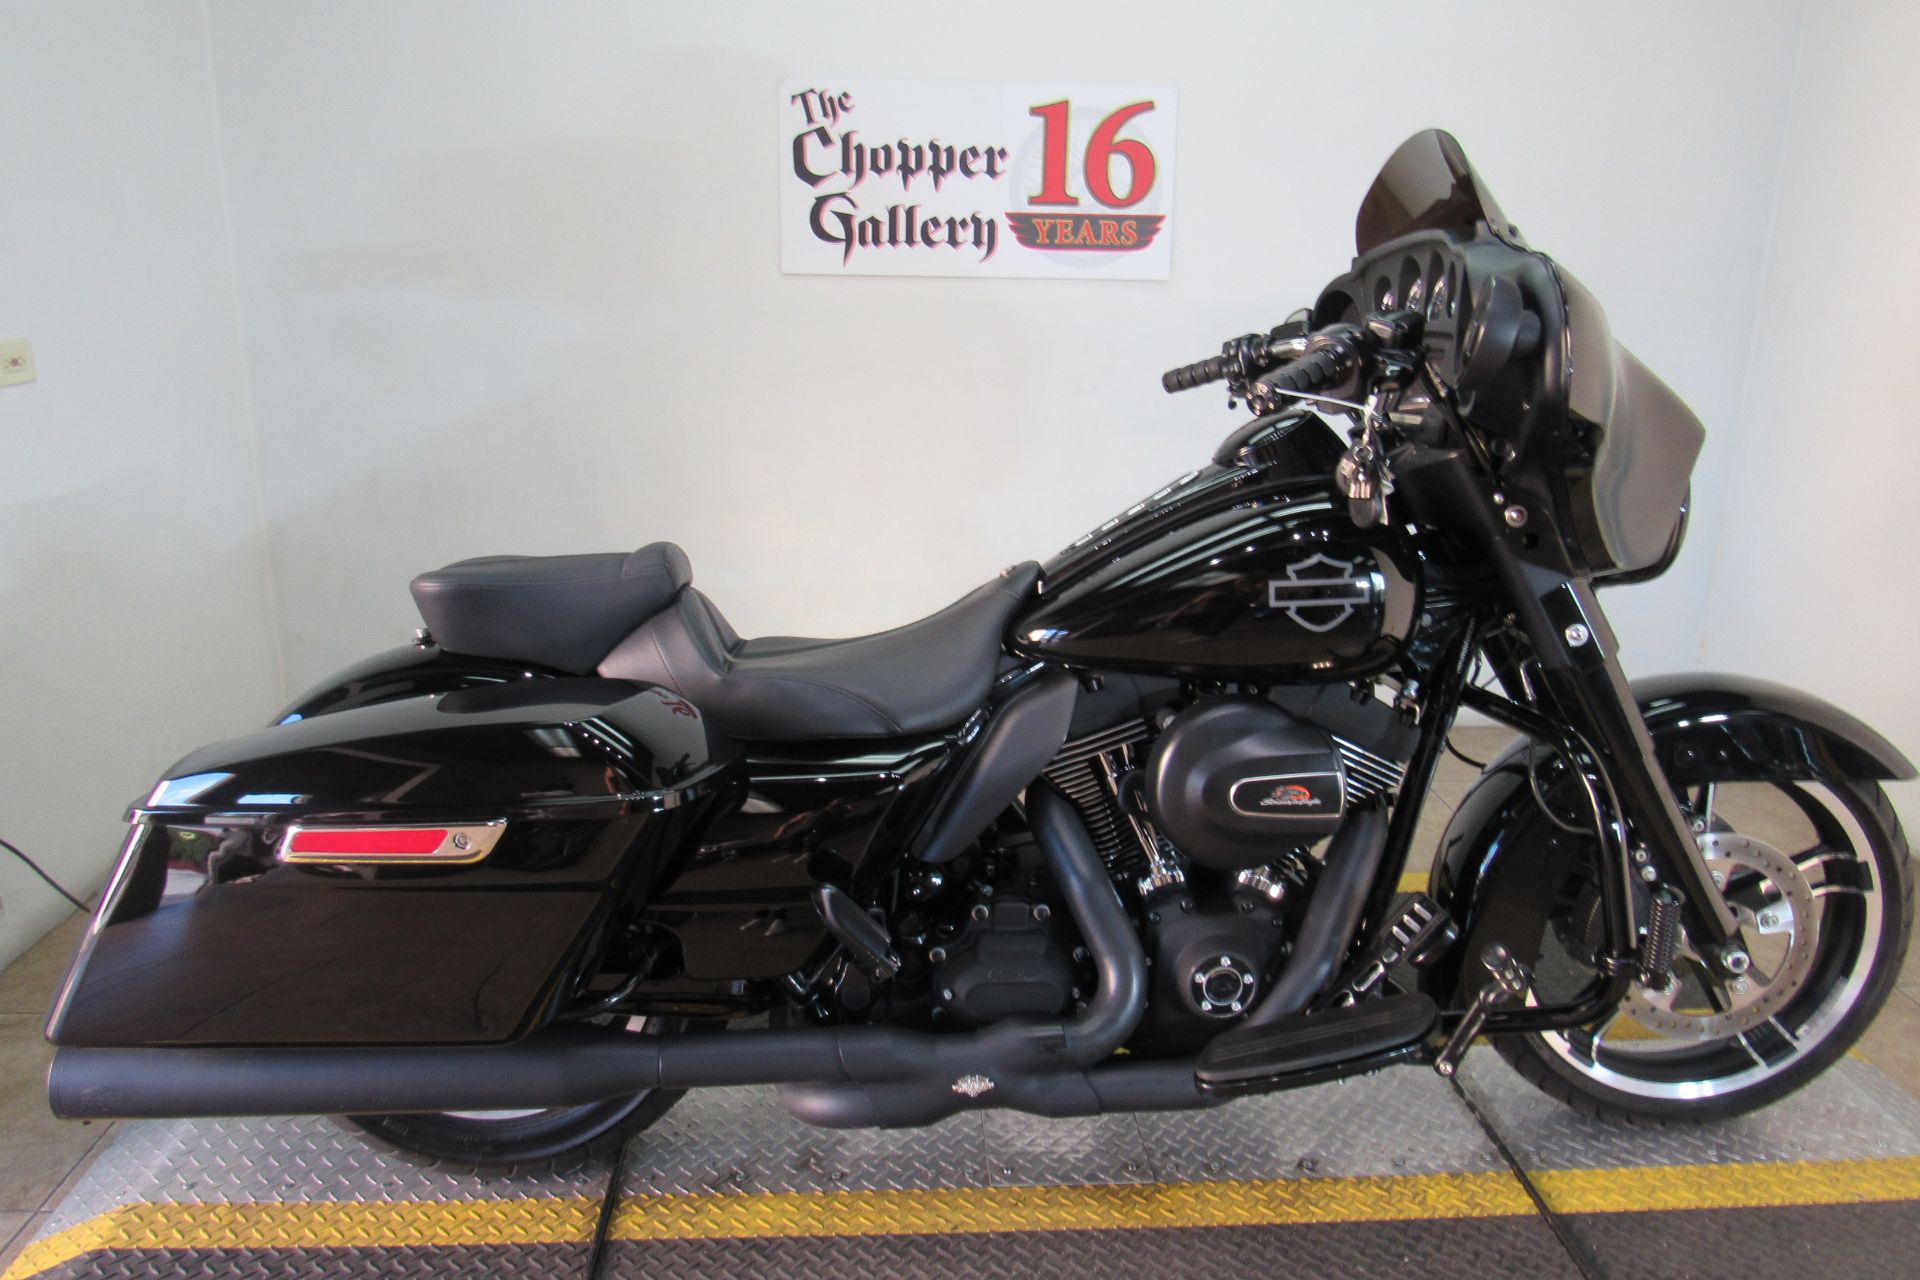 2016 Harley-Davidson Street Glide® Special in Temecula, California - Photo 9